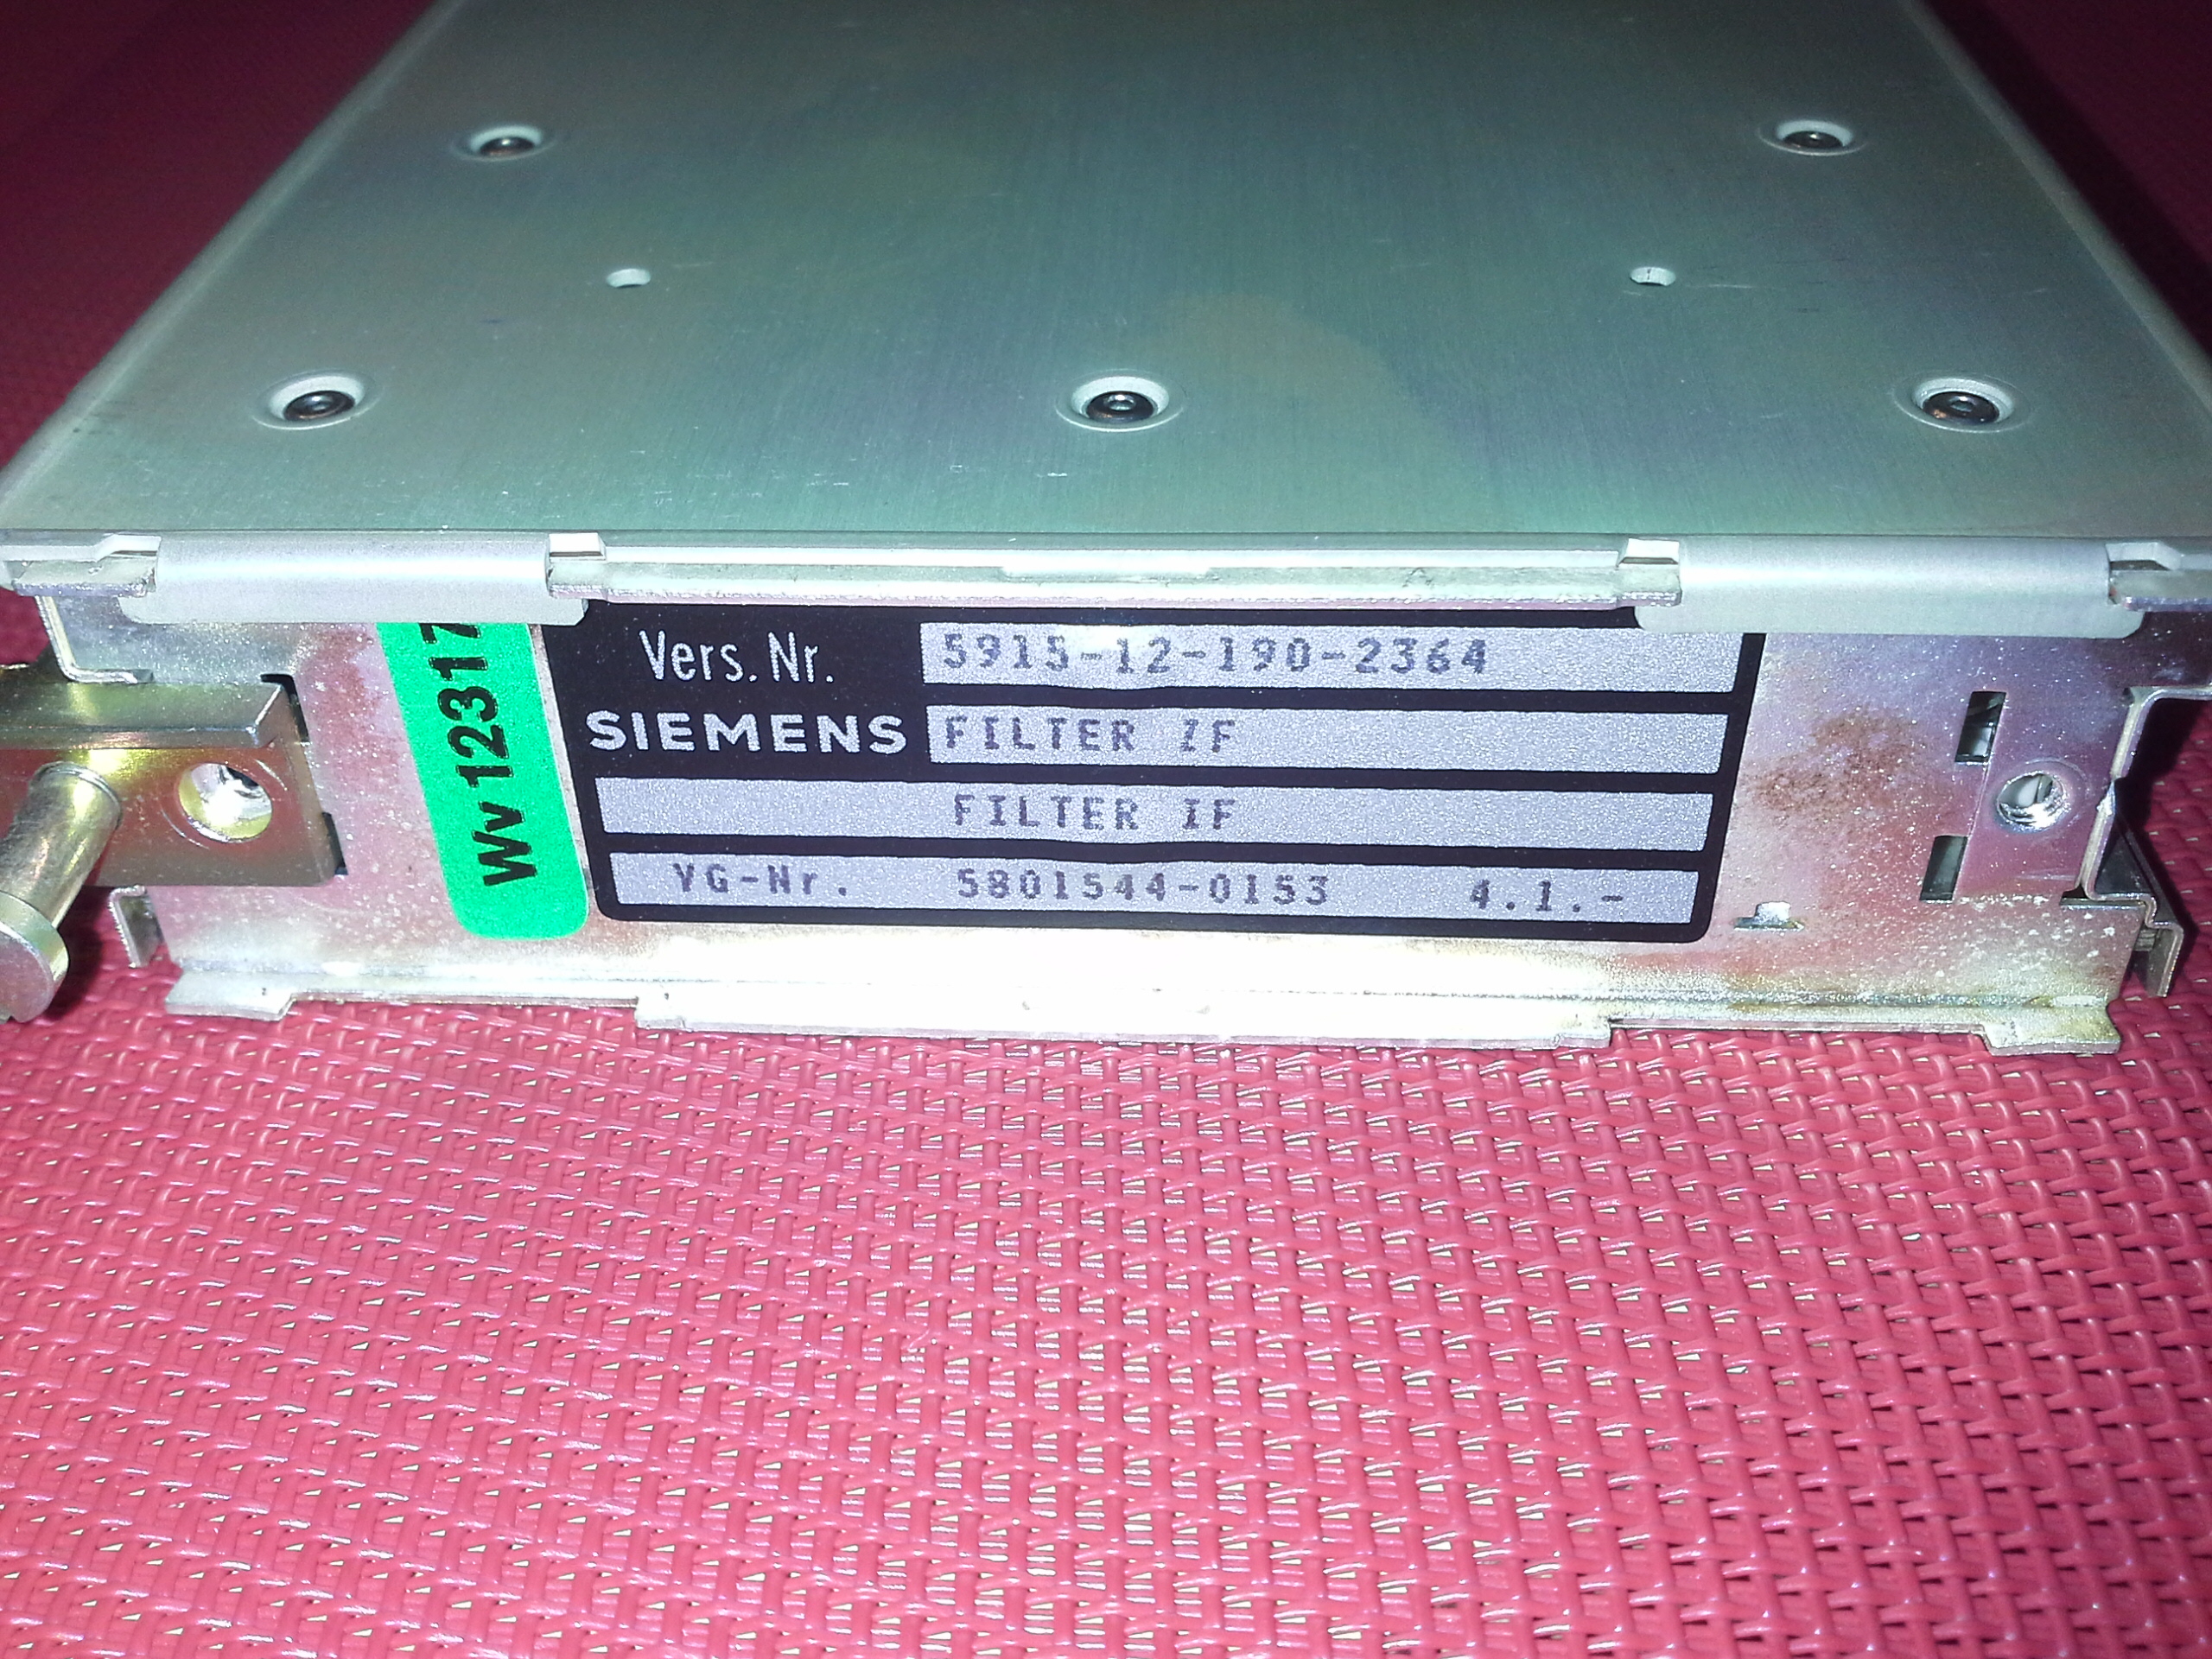 Siemens Filter ZF (Filter IF) 5801544-0153